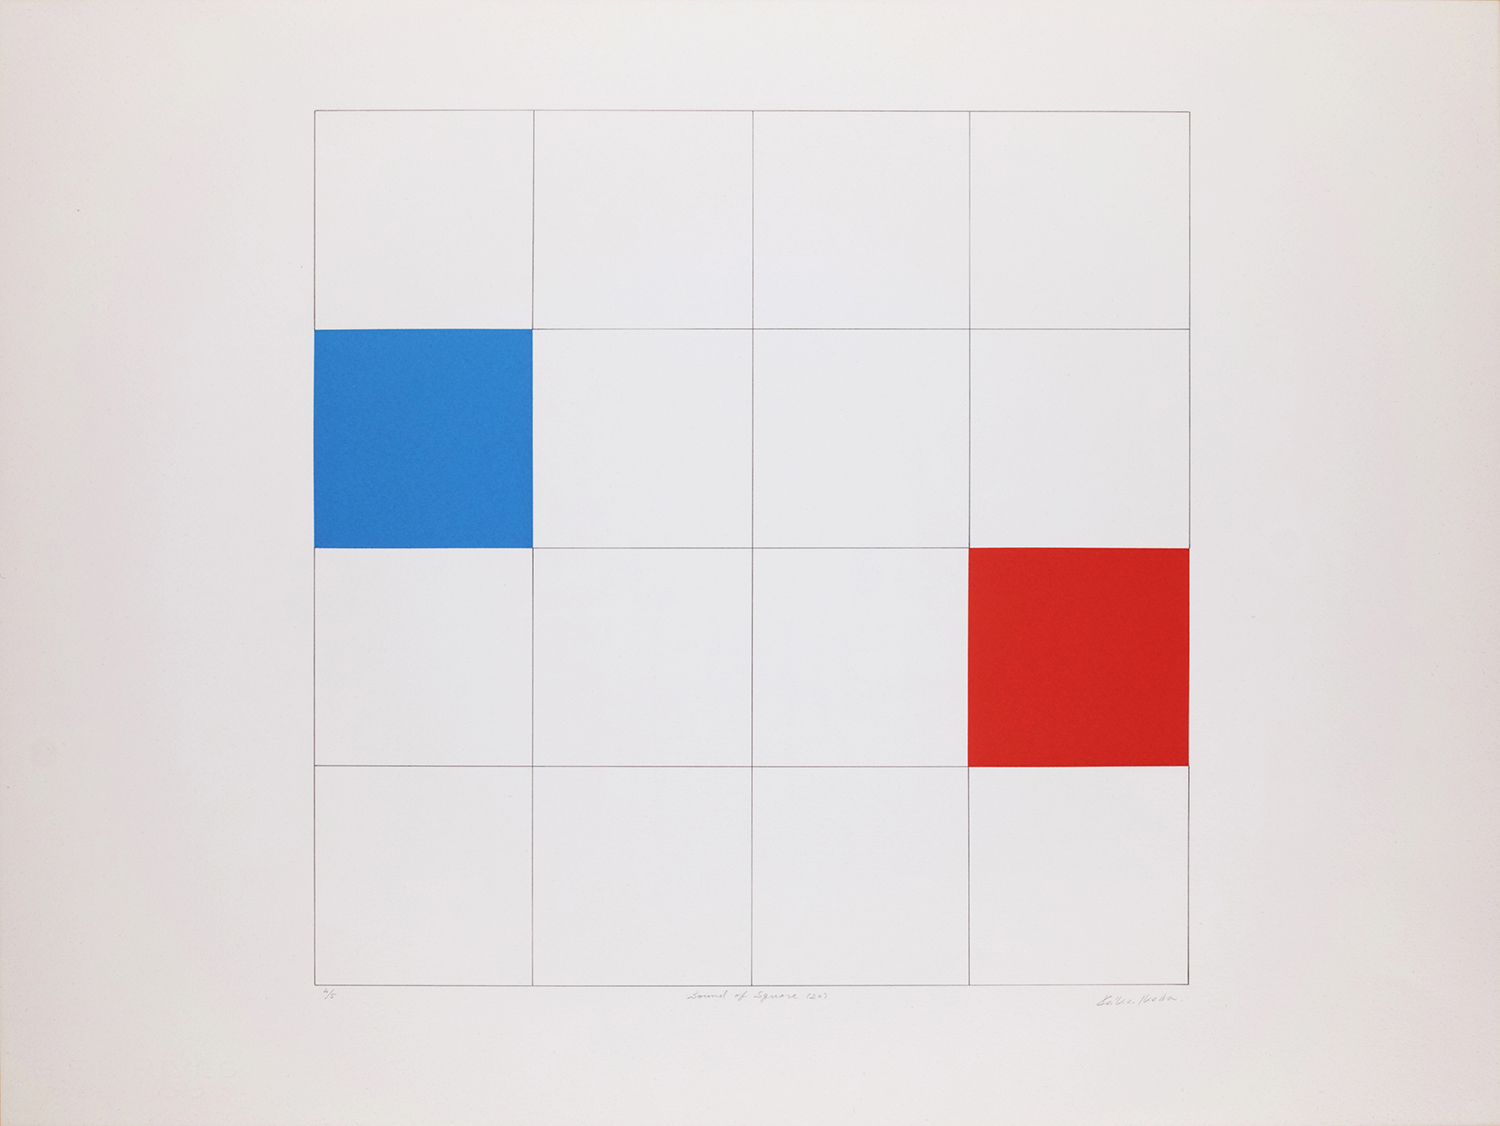 Sound of Square (20) Nazdar color silkscreen, pencil on BFK paper, 545 x 728 mm, 1982 ed:5